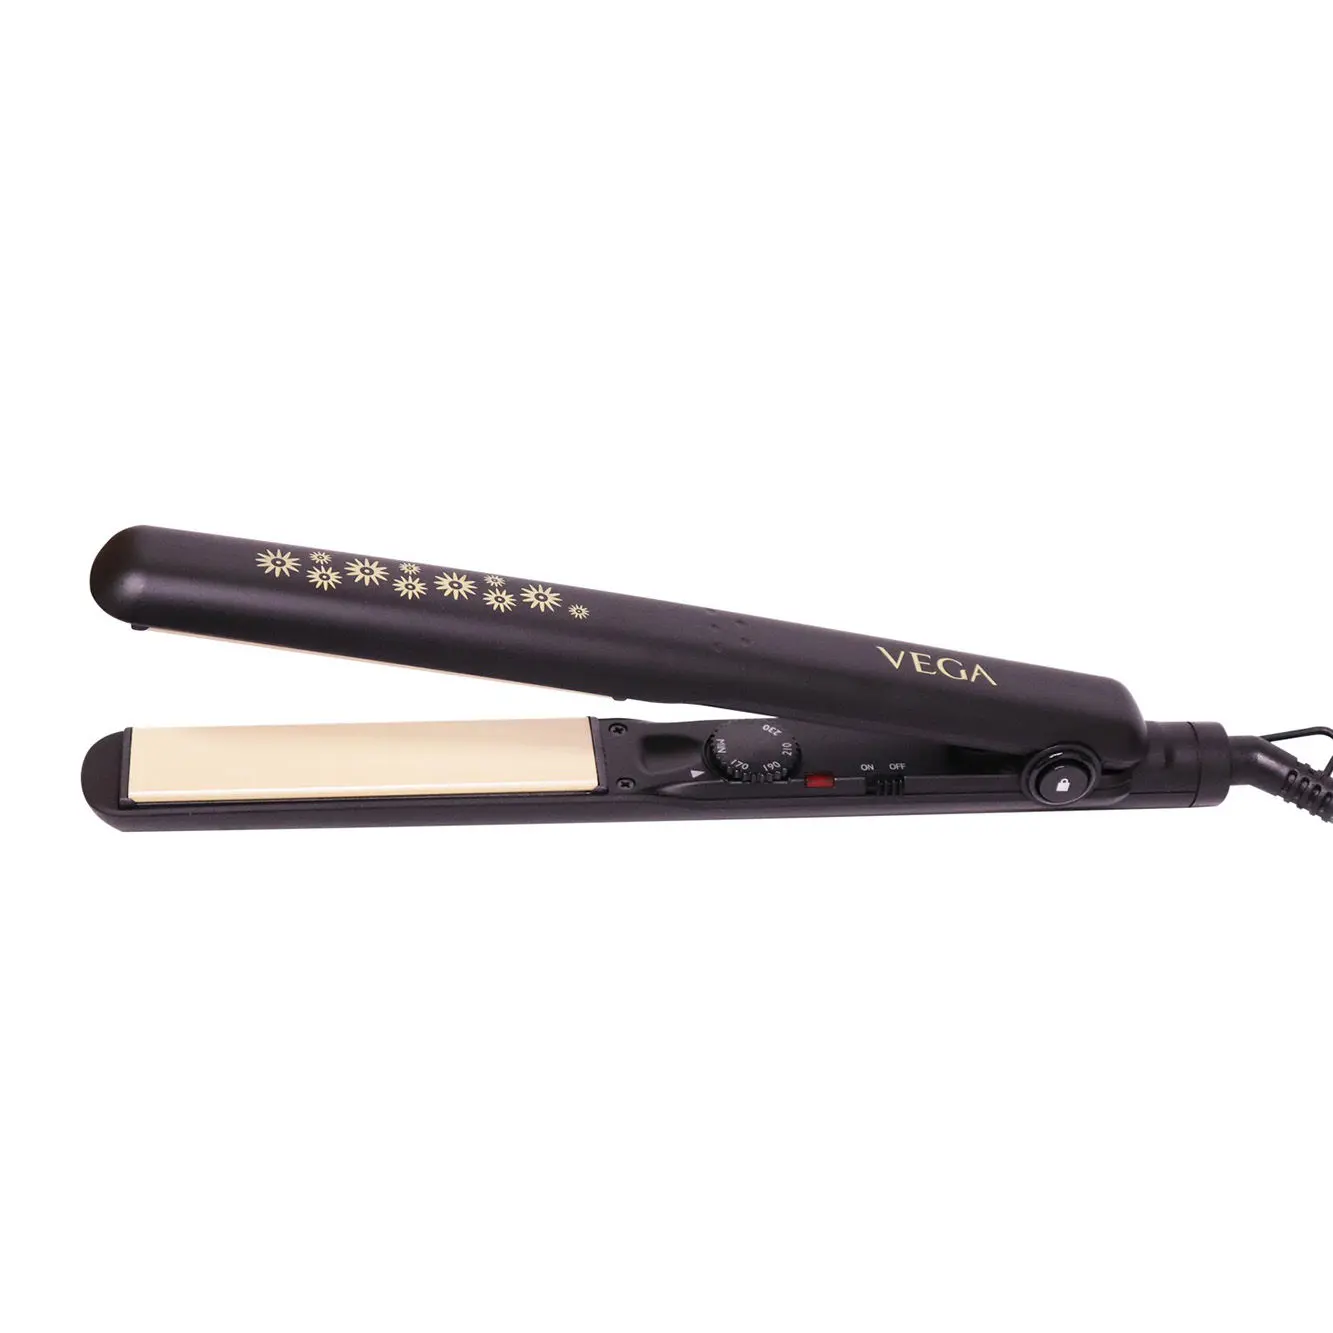 VEGA Keratin Glow Flat Hair Straightener (VHSH-20), Black